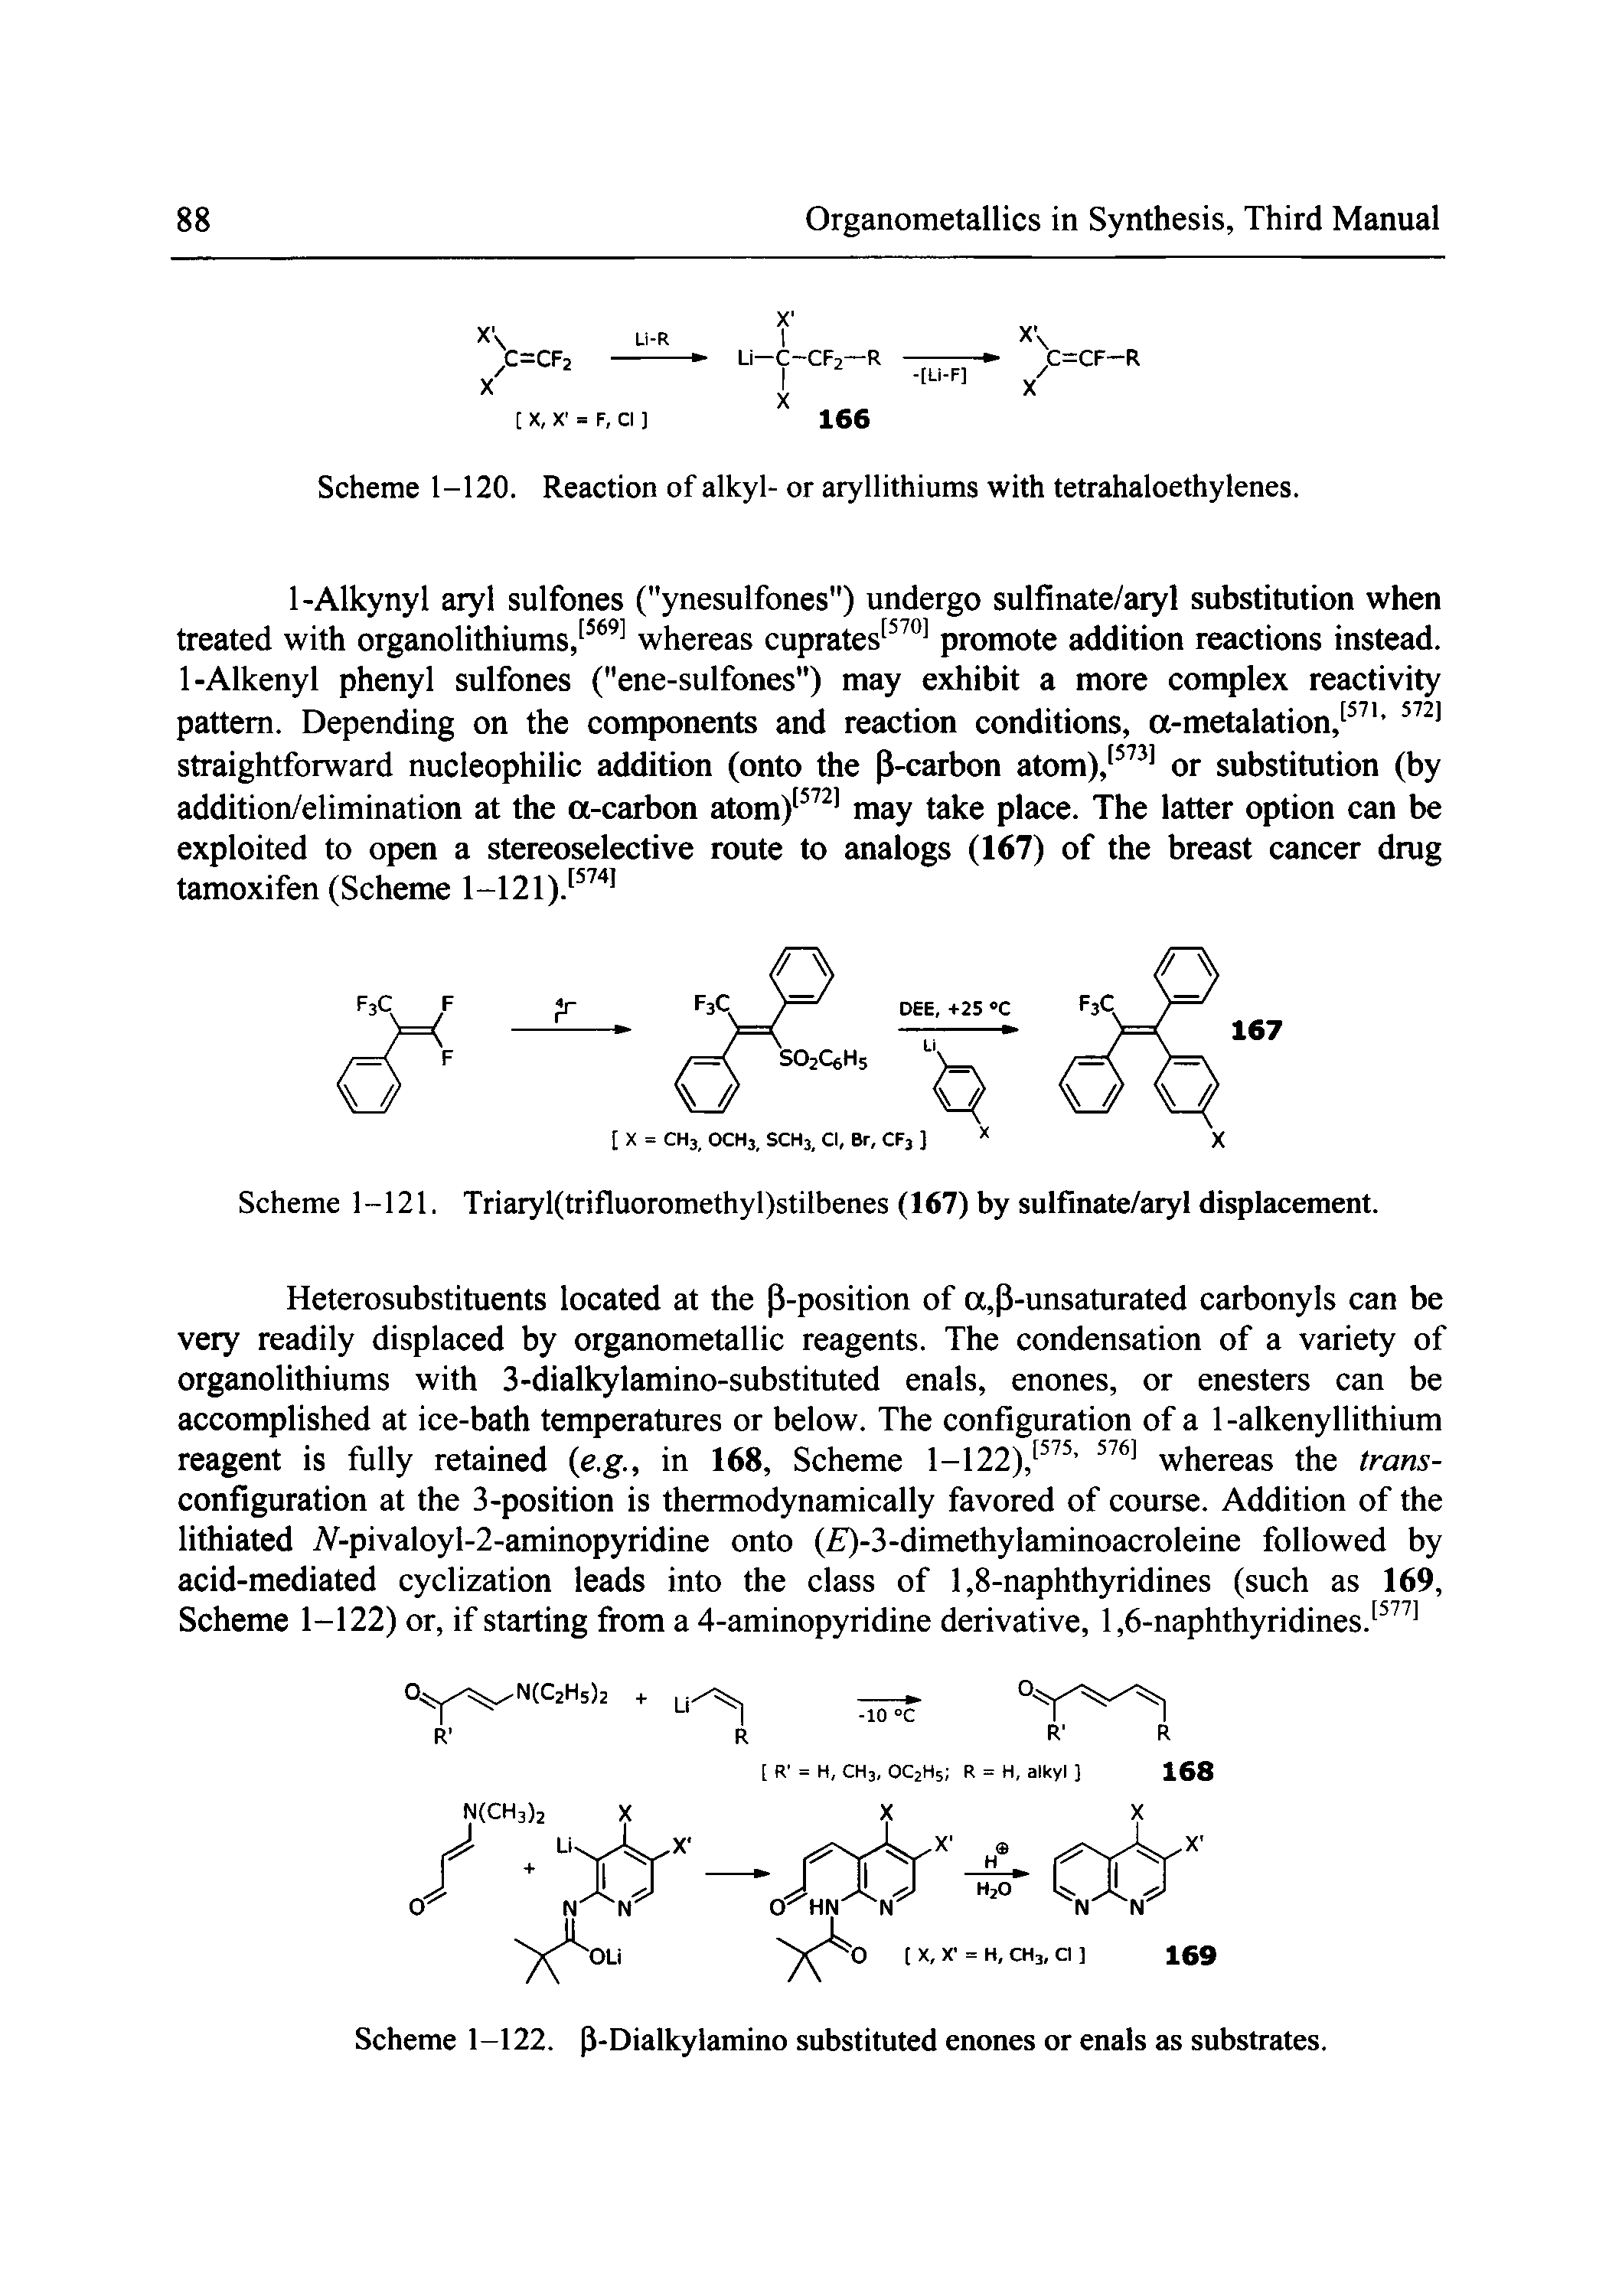 Scheme 1-121. Triaryl(trifluoromethyl)stilbenes (167) by sulfinate/aryl displacement.